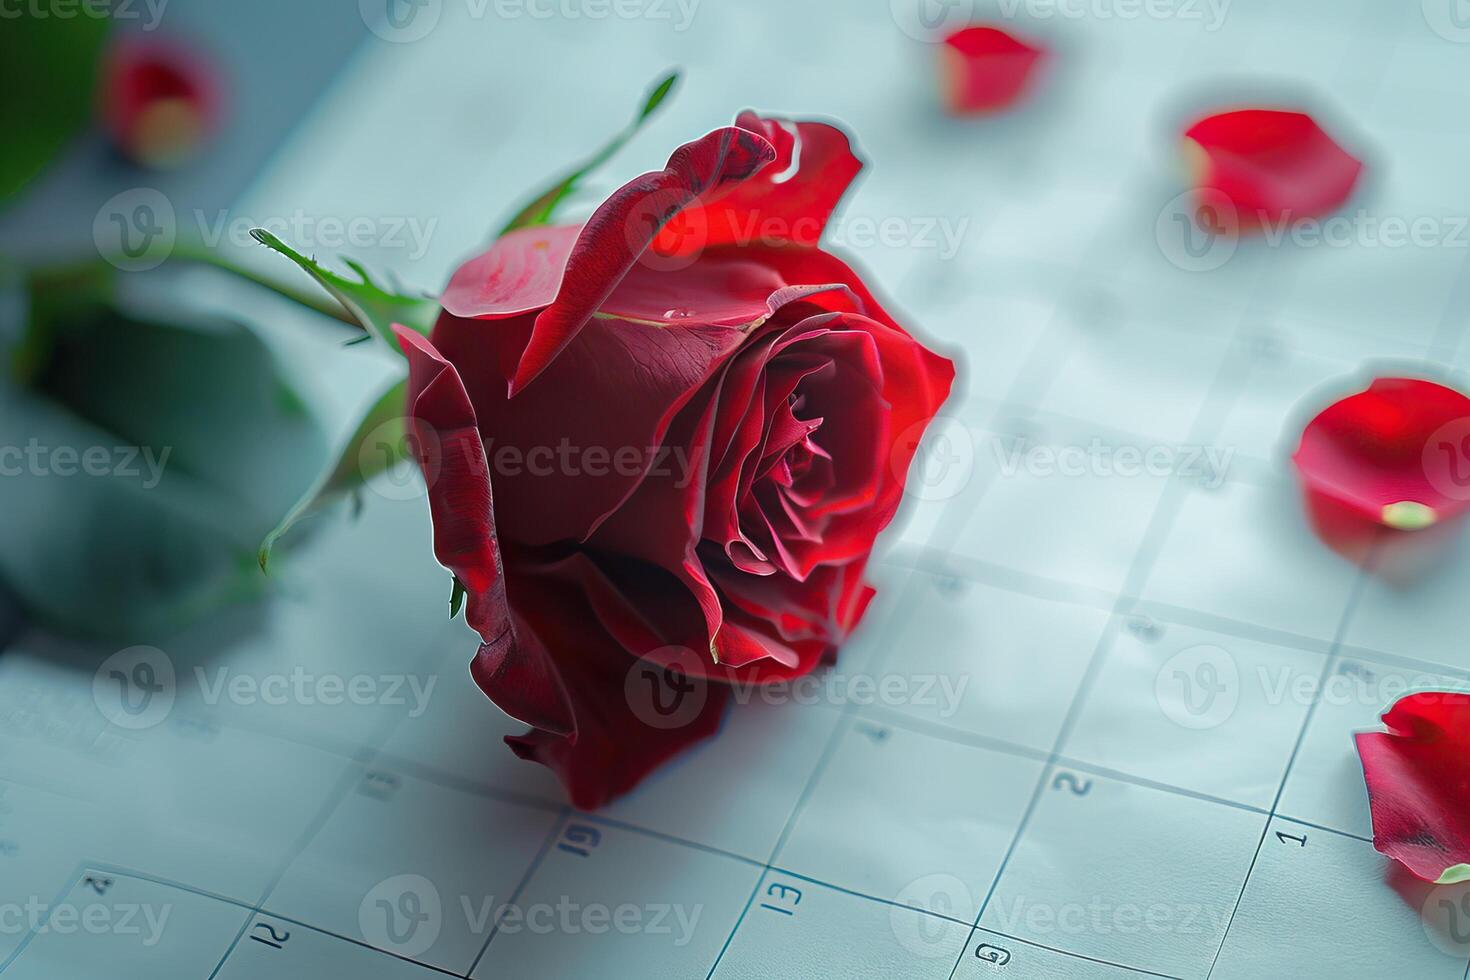 rouge Rose bourgeon sur calendrier montrant les mères journée rouge Rose bourgeon sur calendrier montrant les mères journée photo